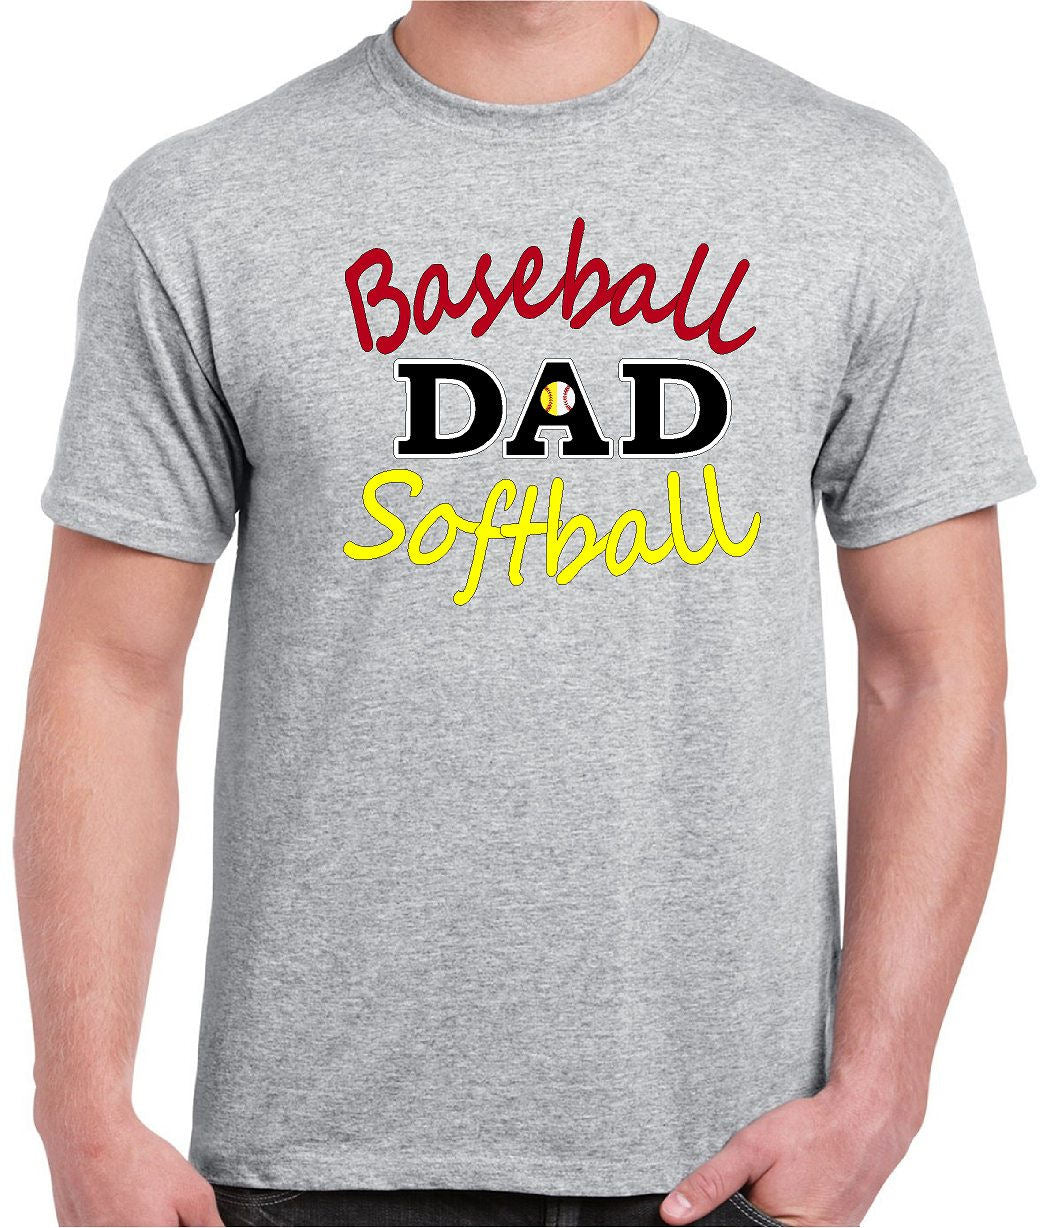 OurTshirtShack Baseball Shirts; Baseball Softball Dad Cotton Crew Neck Tee Sport Gray / M